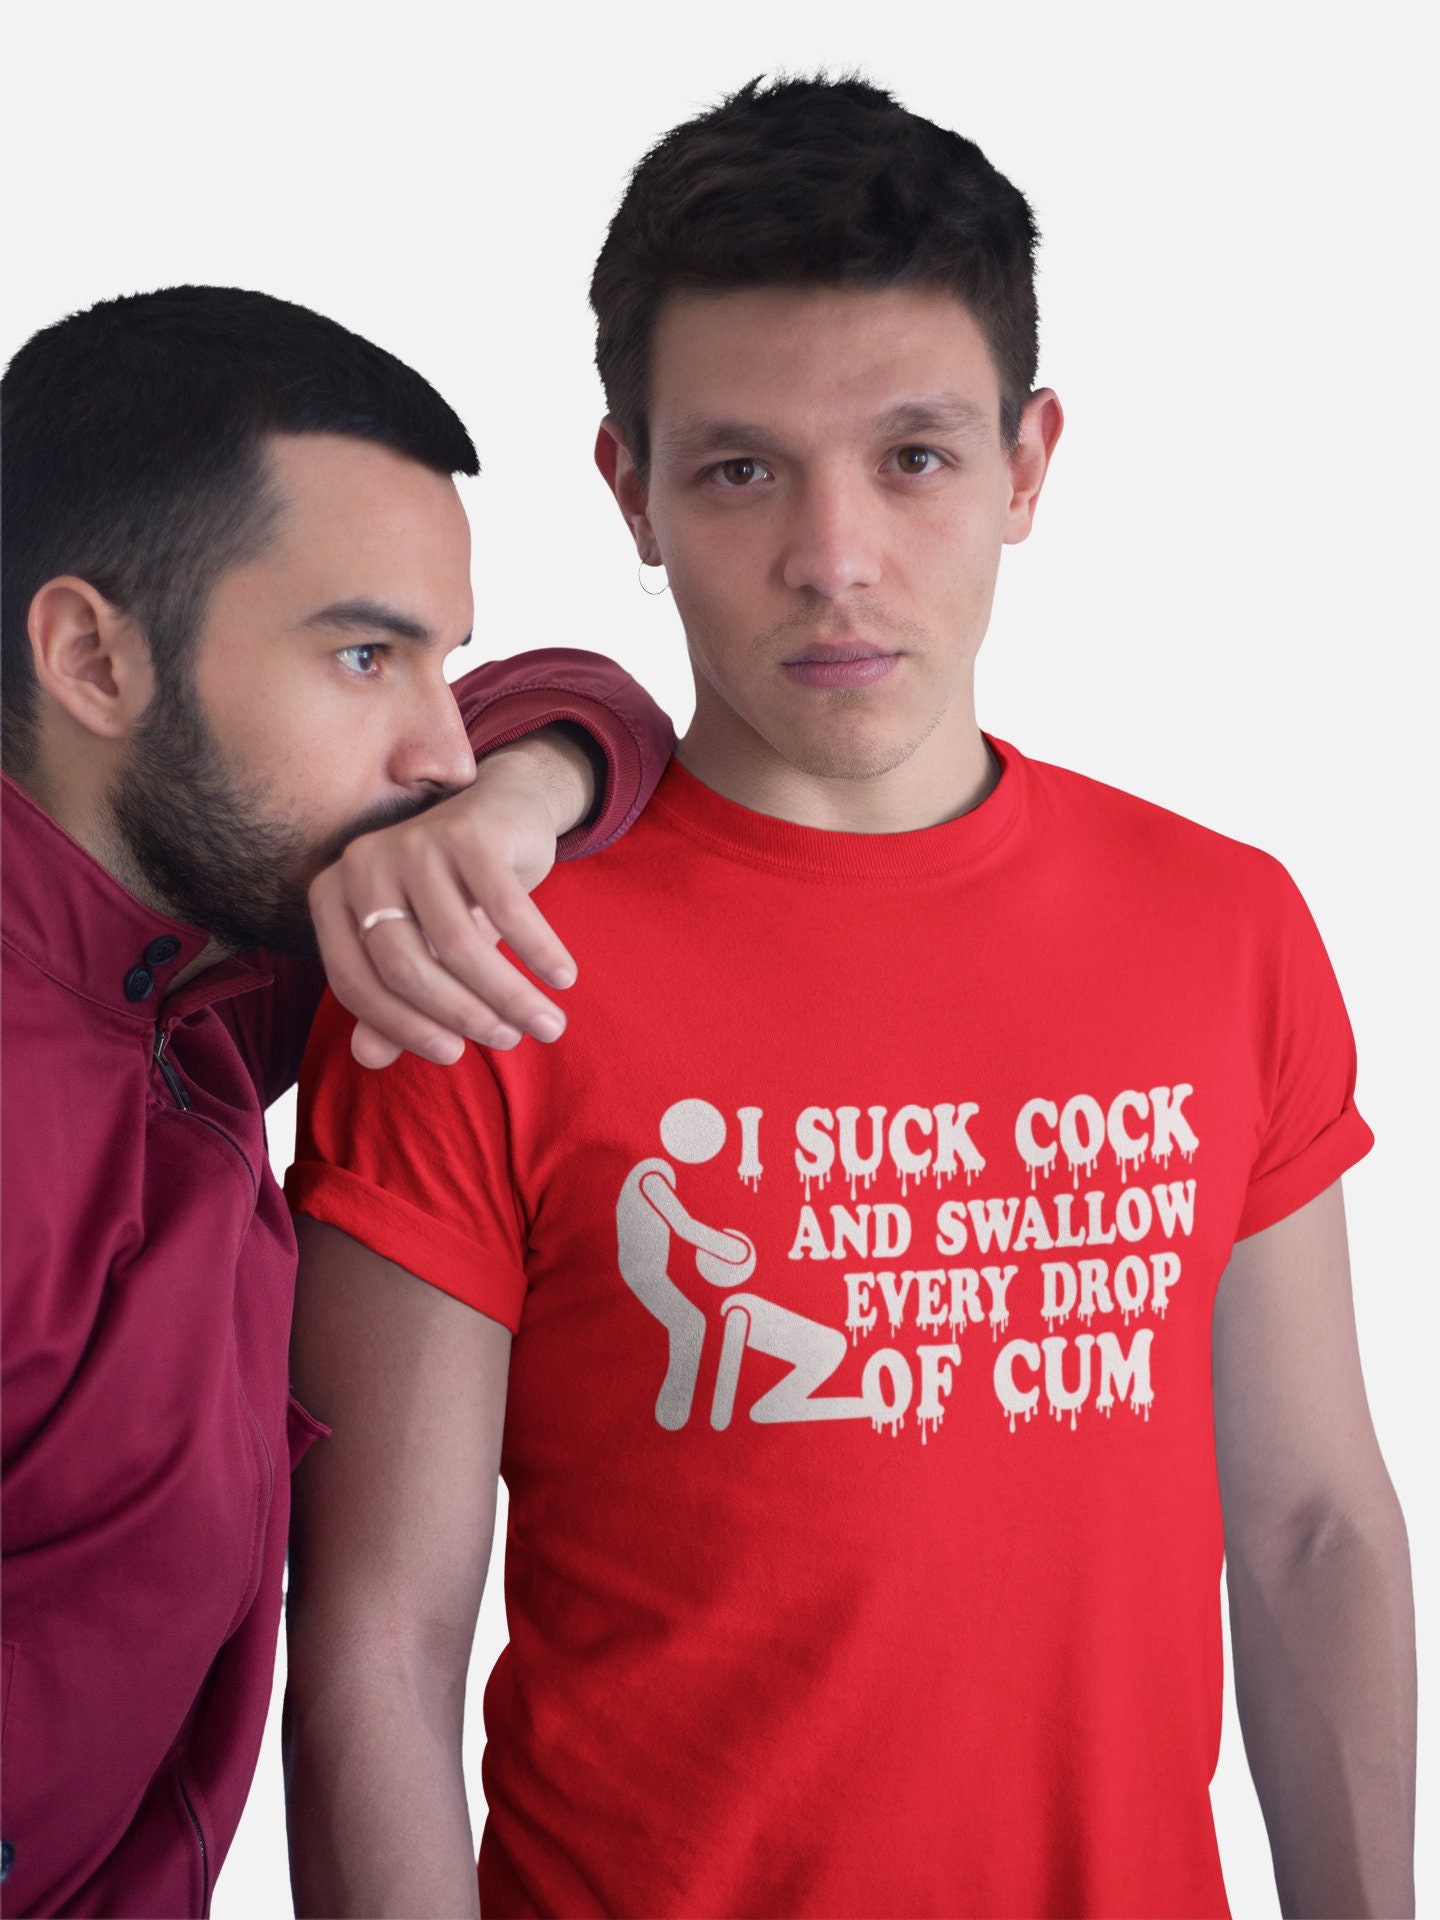 I Suck Cock Swallow Every Drop of Cum LGBT Shirt